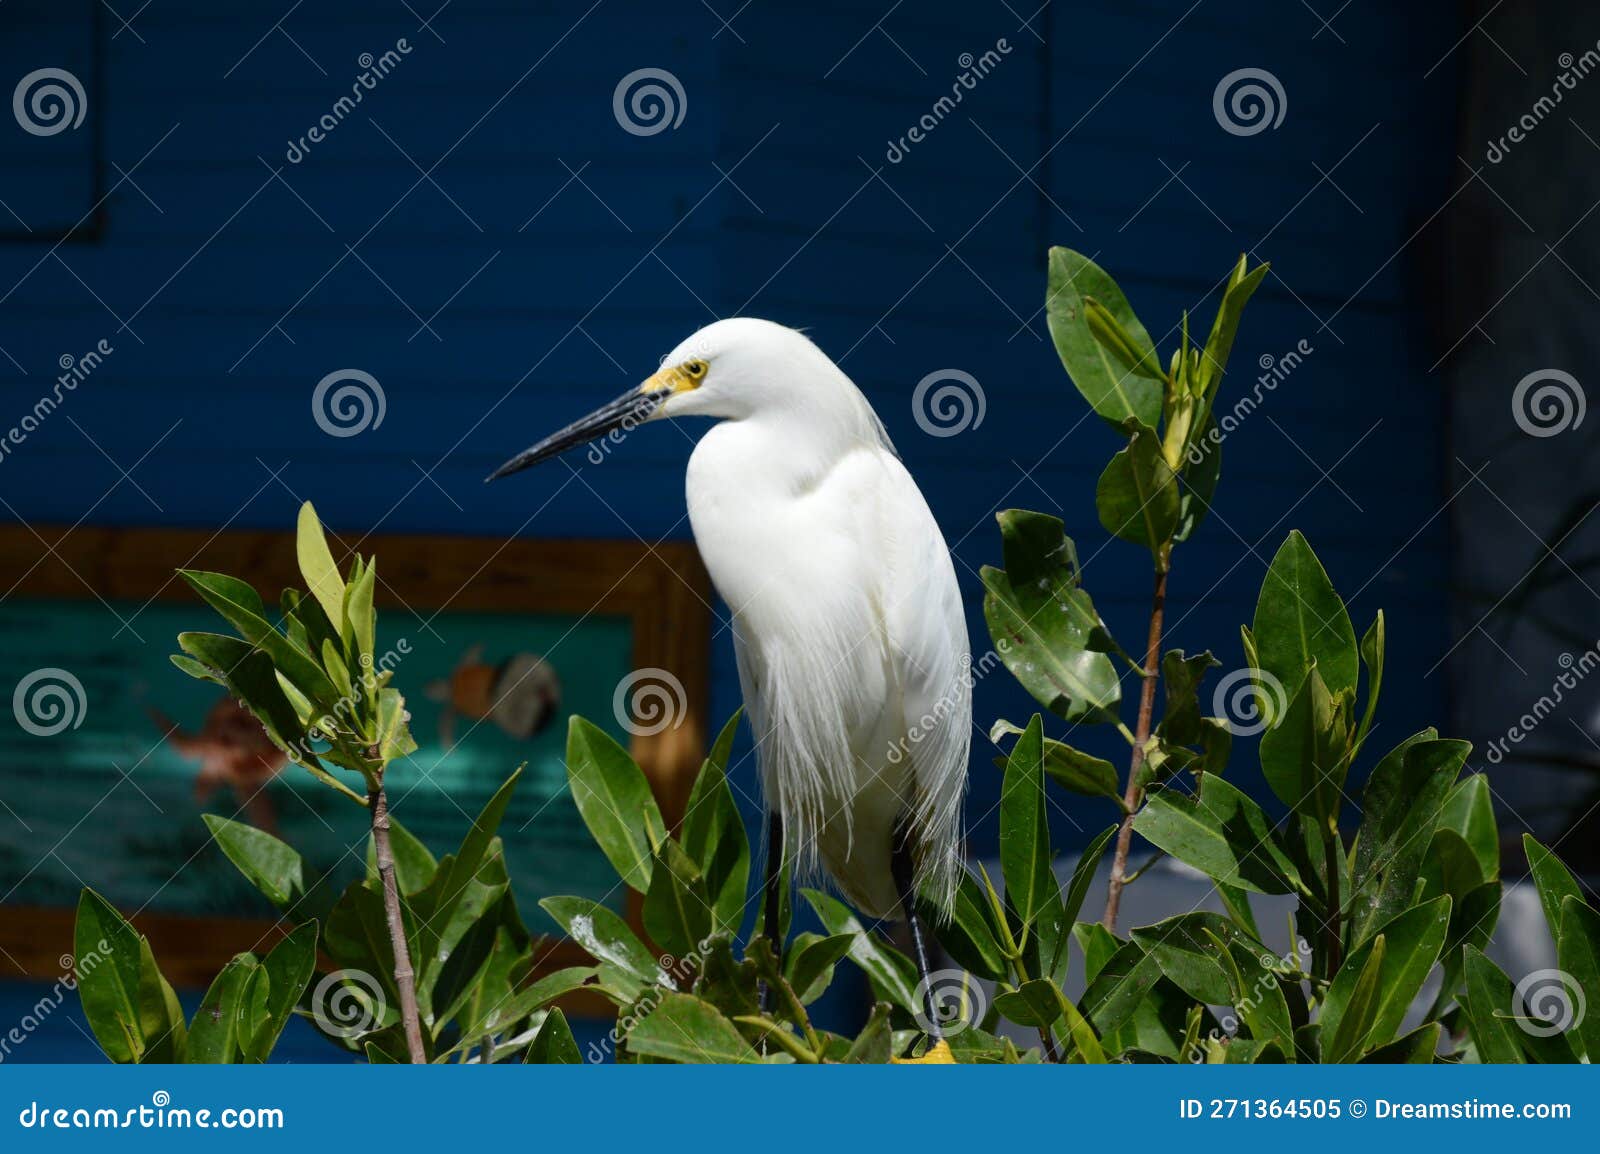 garceta nÃ­vea. nivea egret, is a heron species. (ardeidae)